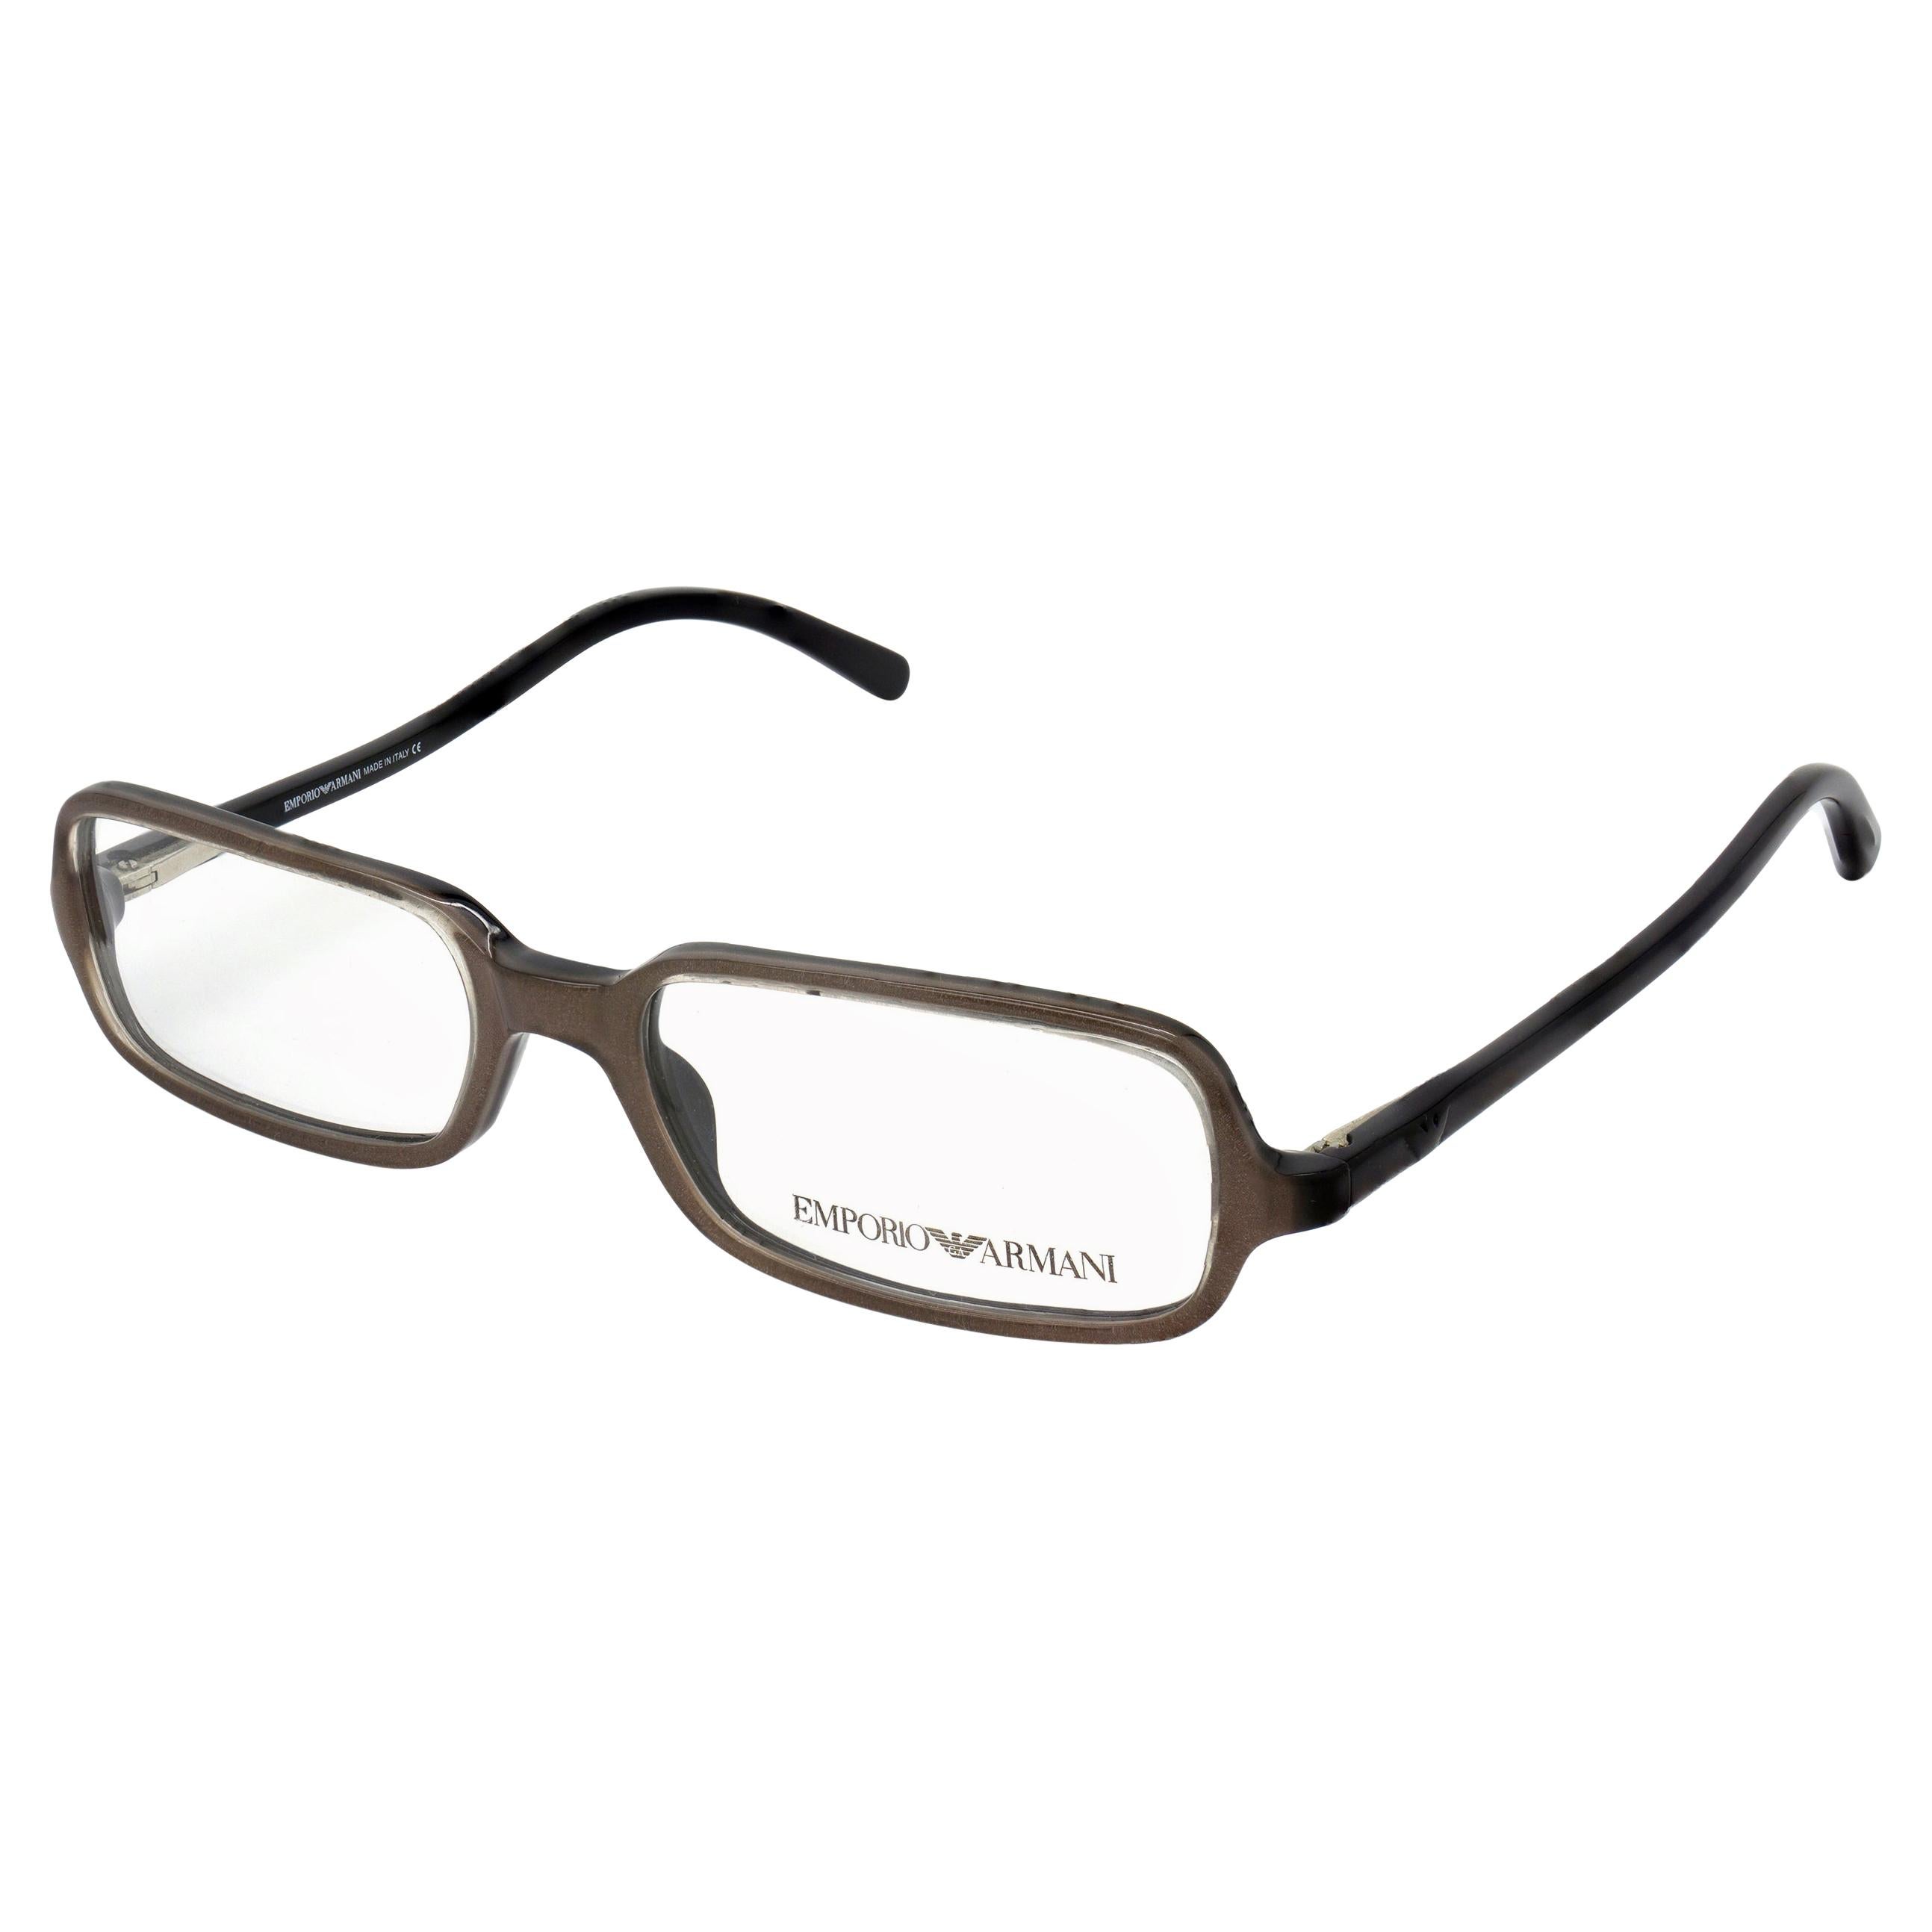 Emporio Armani vintage eyeglasses